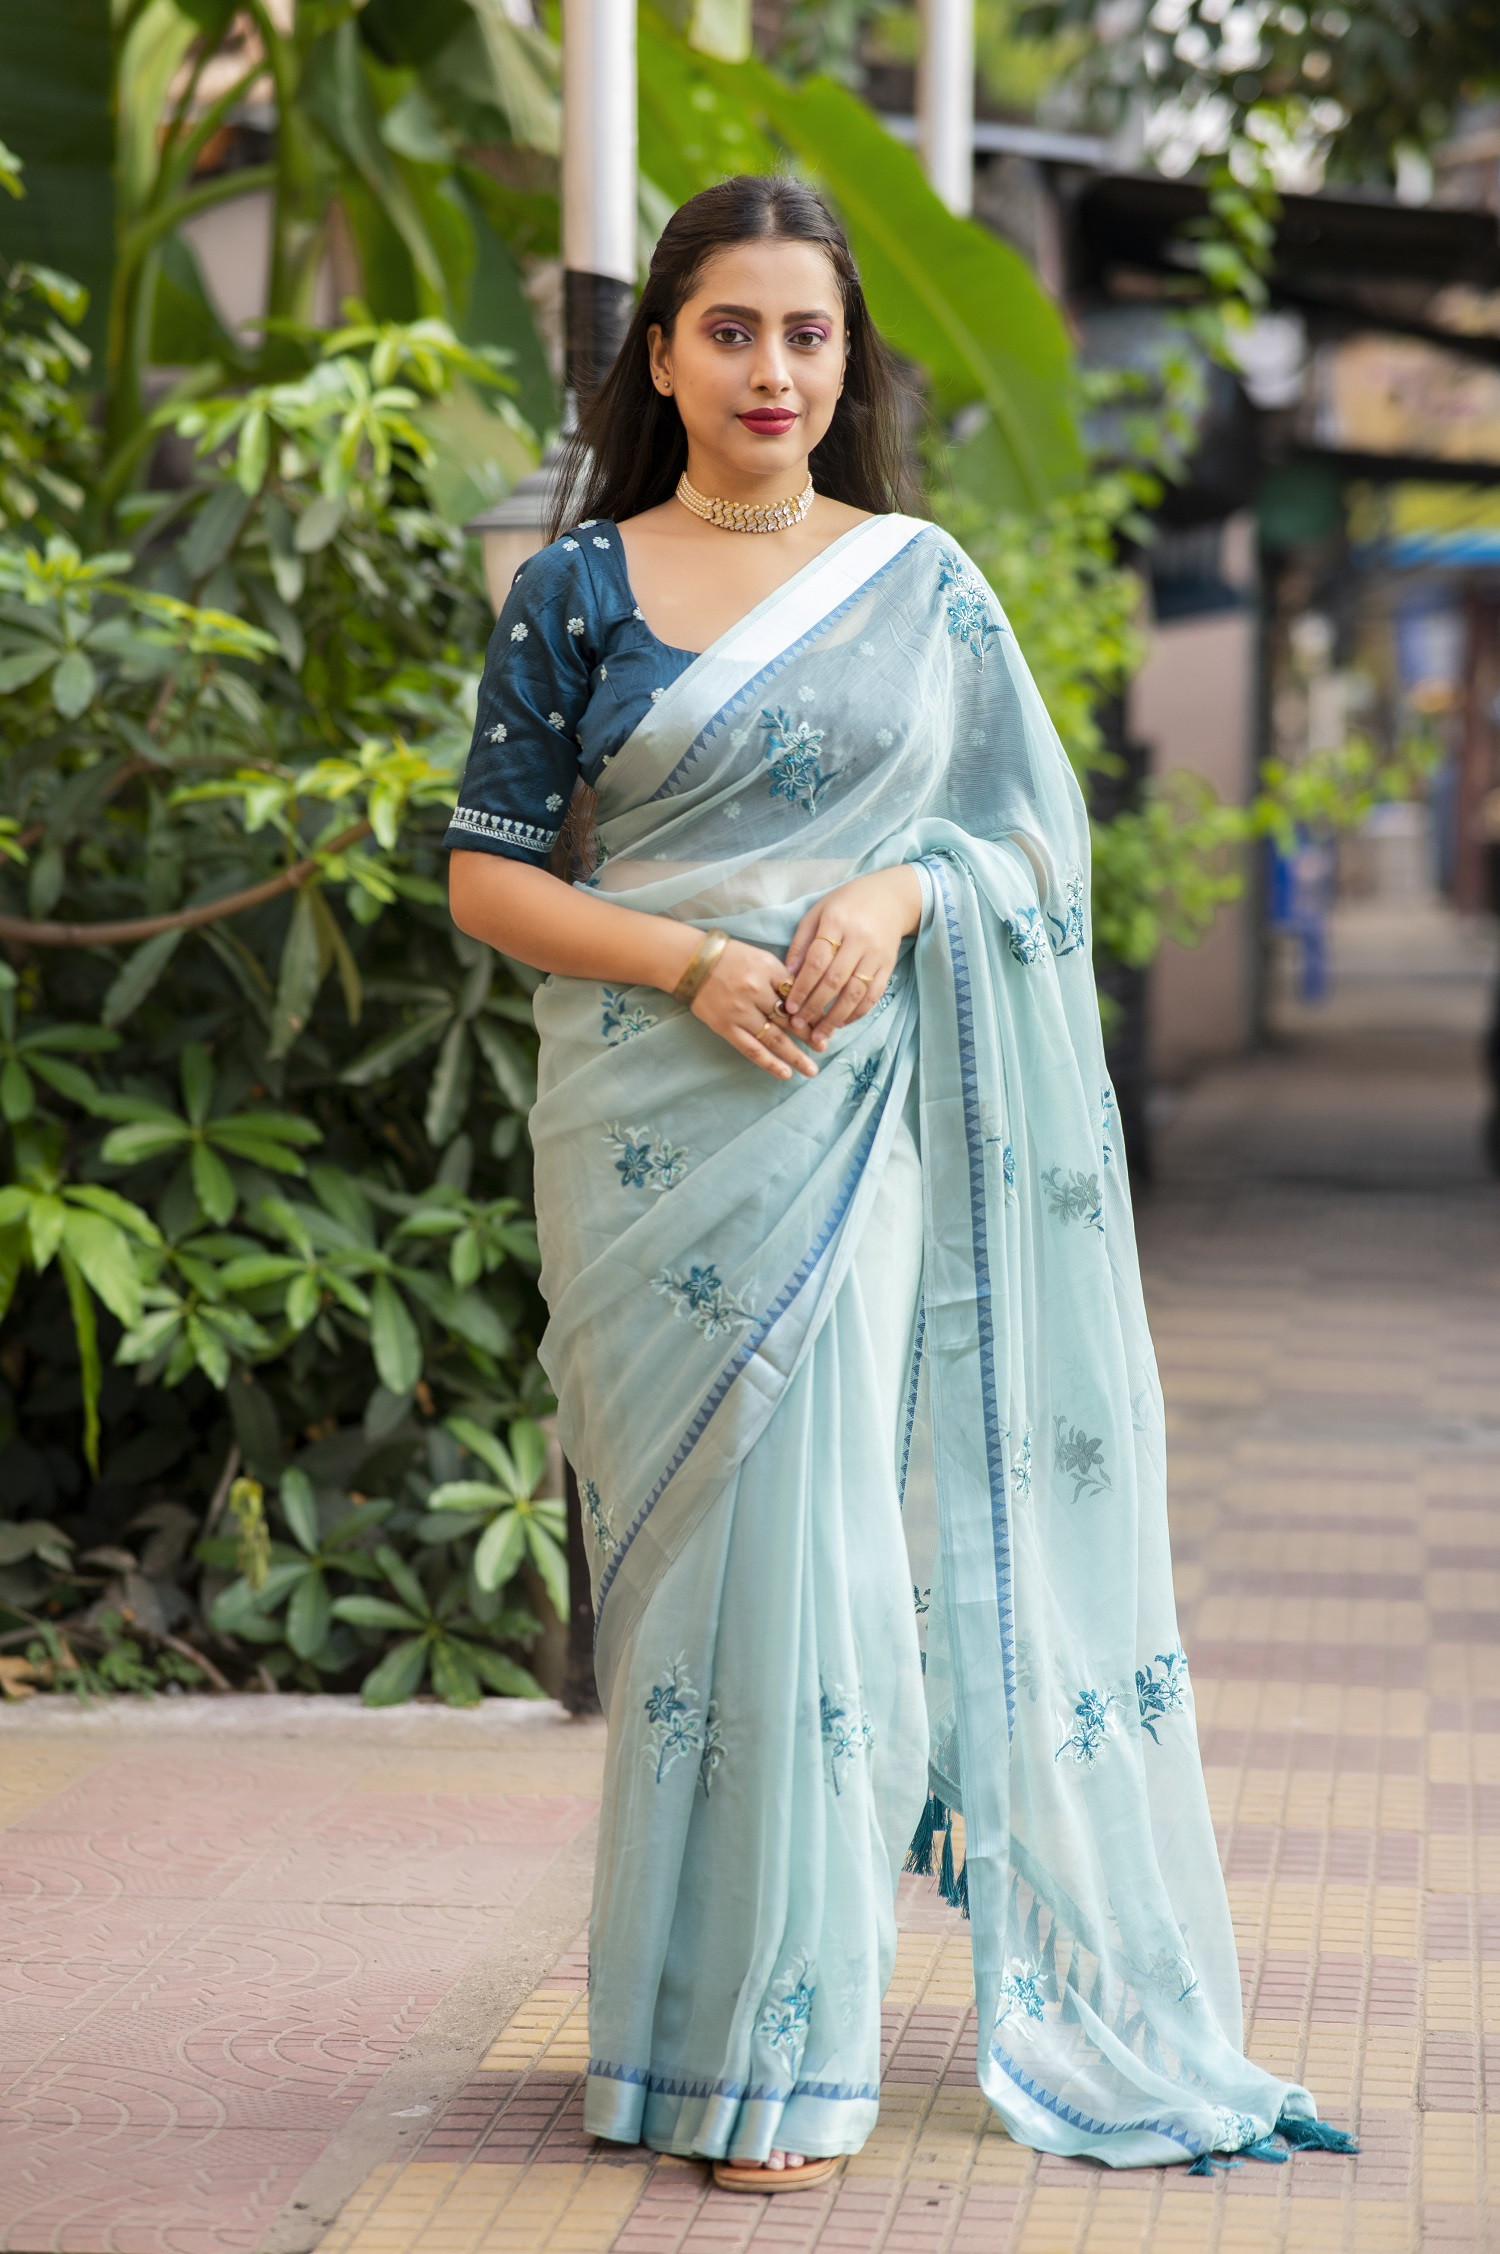 Designer soft Chiffon saree with Embroidery & stone Work - Dusty Blue